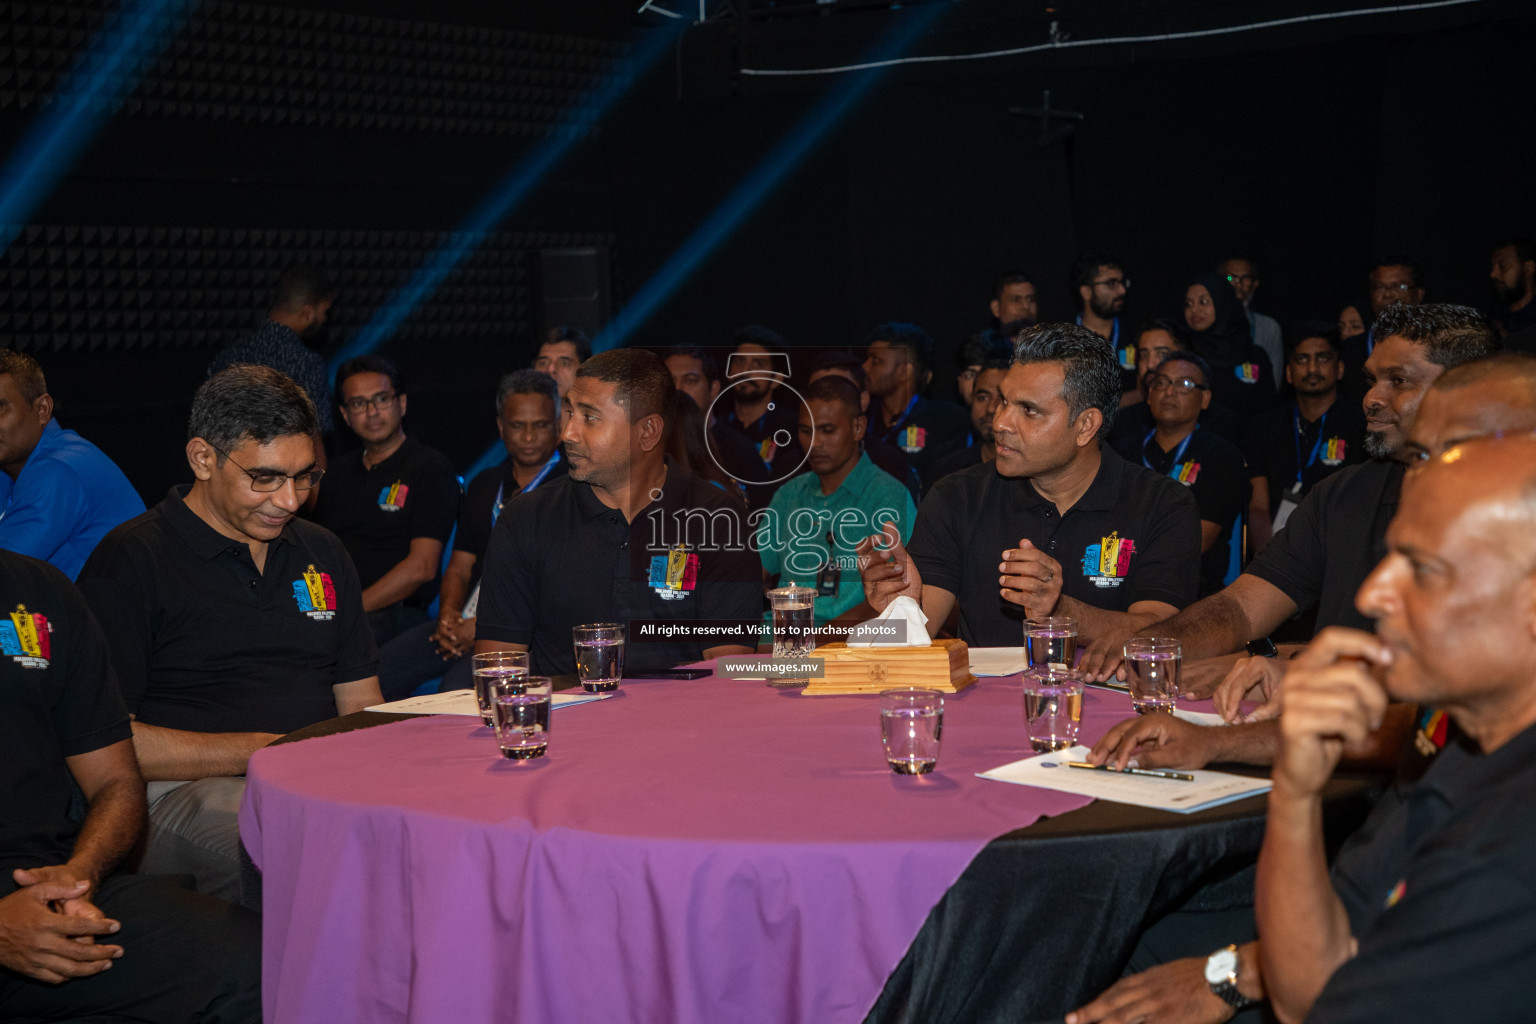 VAM Season Draft 2022 was held in Male', Maldives on Wednesday, 1st June 2022.  Photos: Ismail Thoriq / images.mv